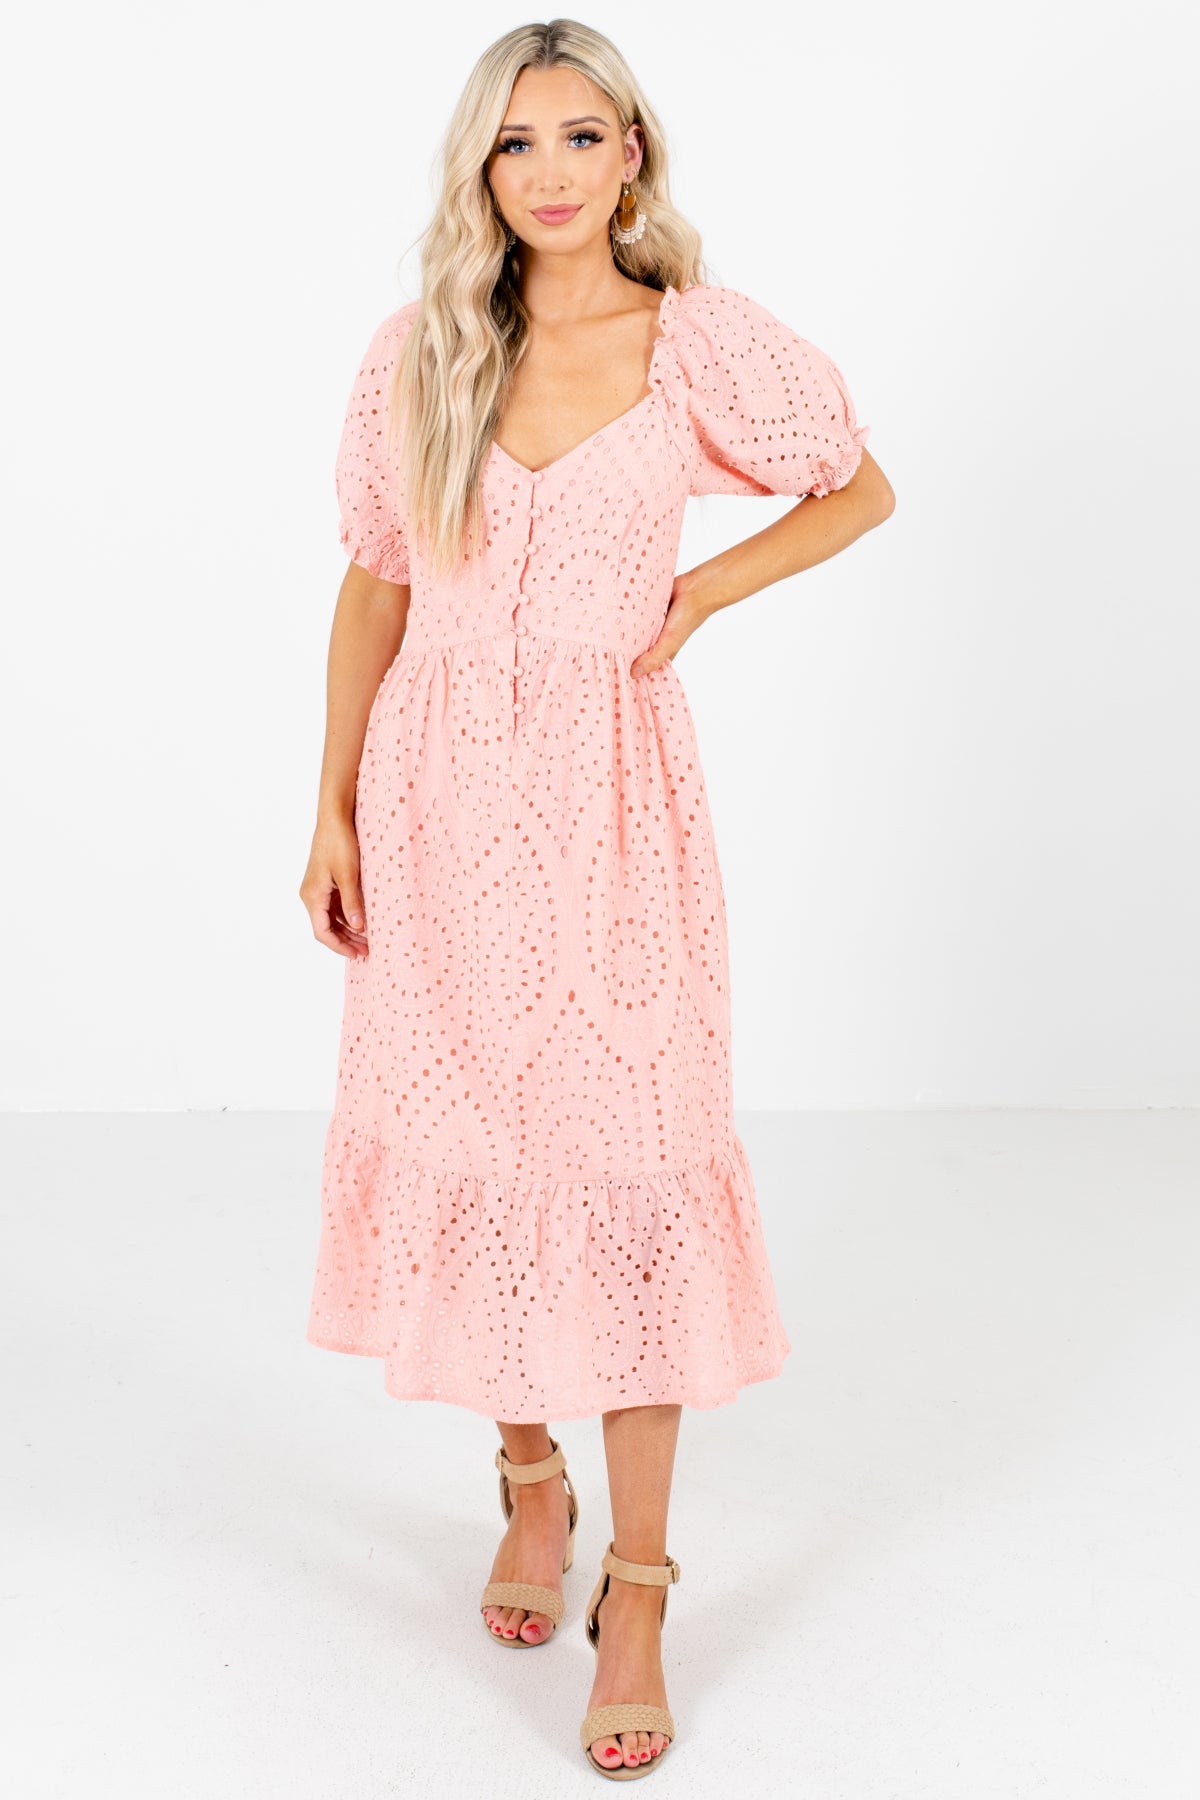 Southern Summer Pink Midi Dress ...